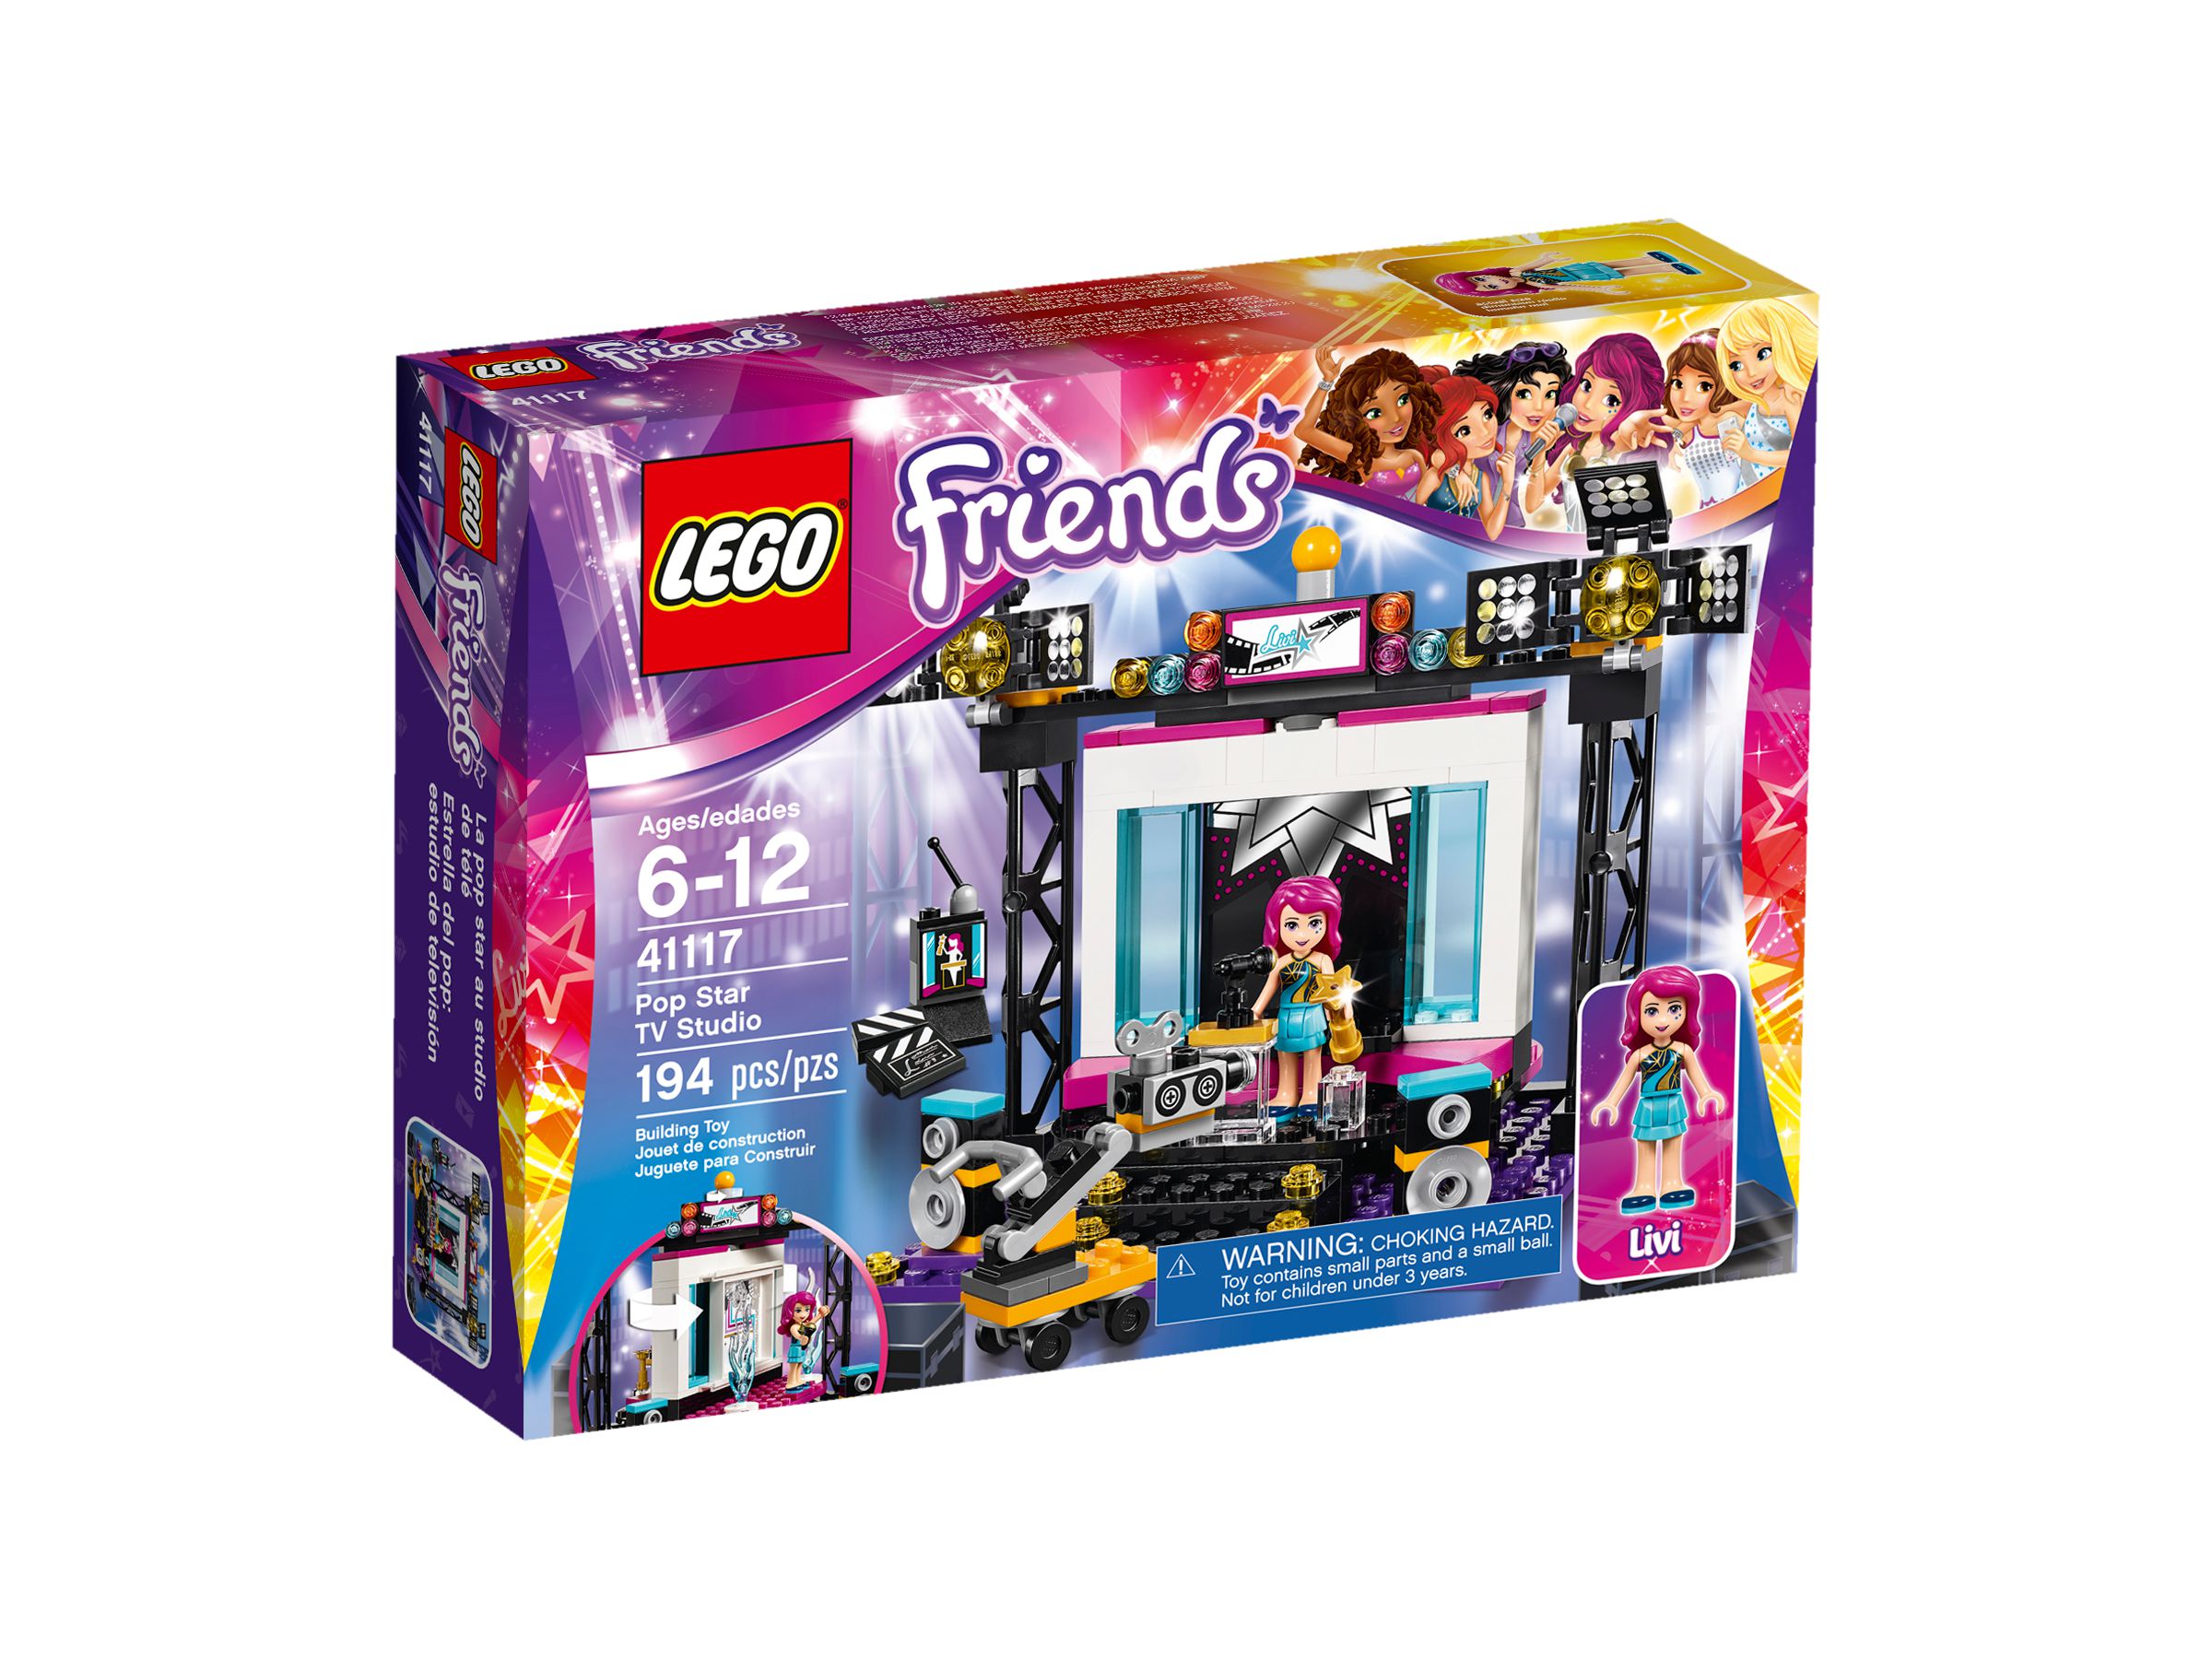 LEGO Friends 41117 Popstar TV-Studio LEGO_41117_alt1.jpg